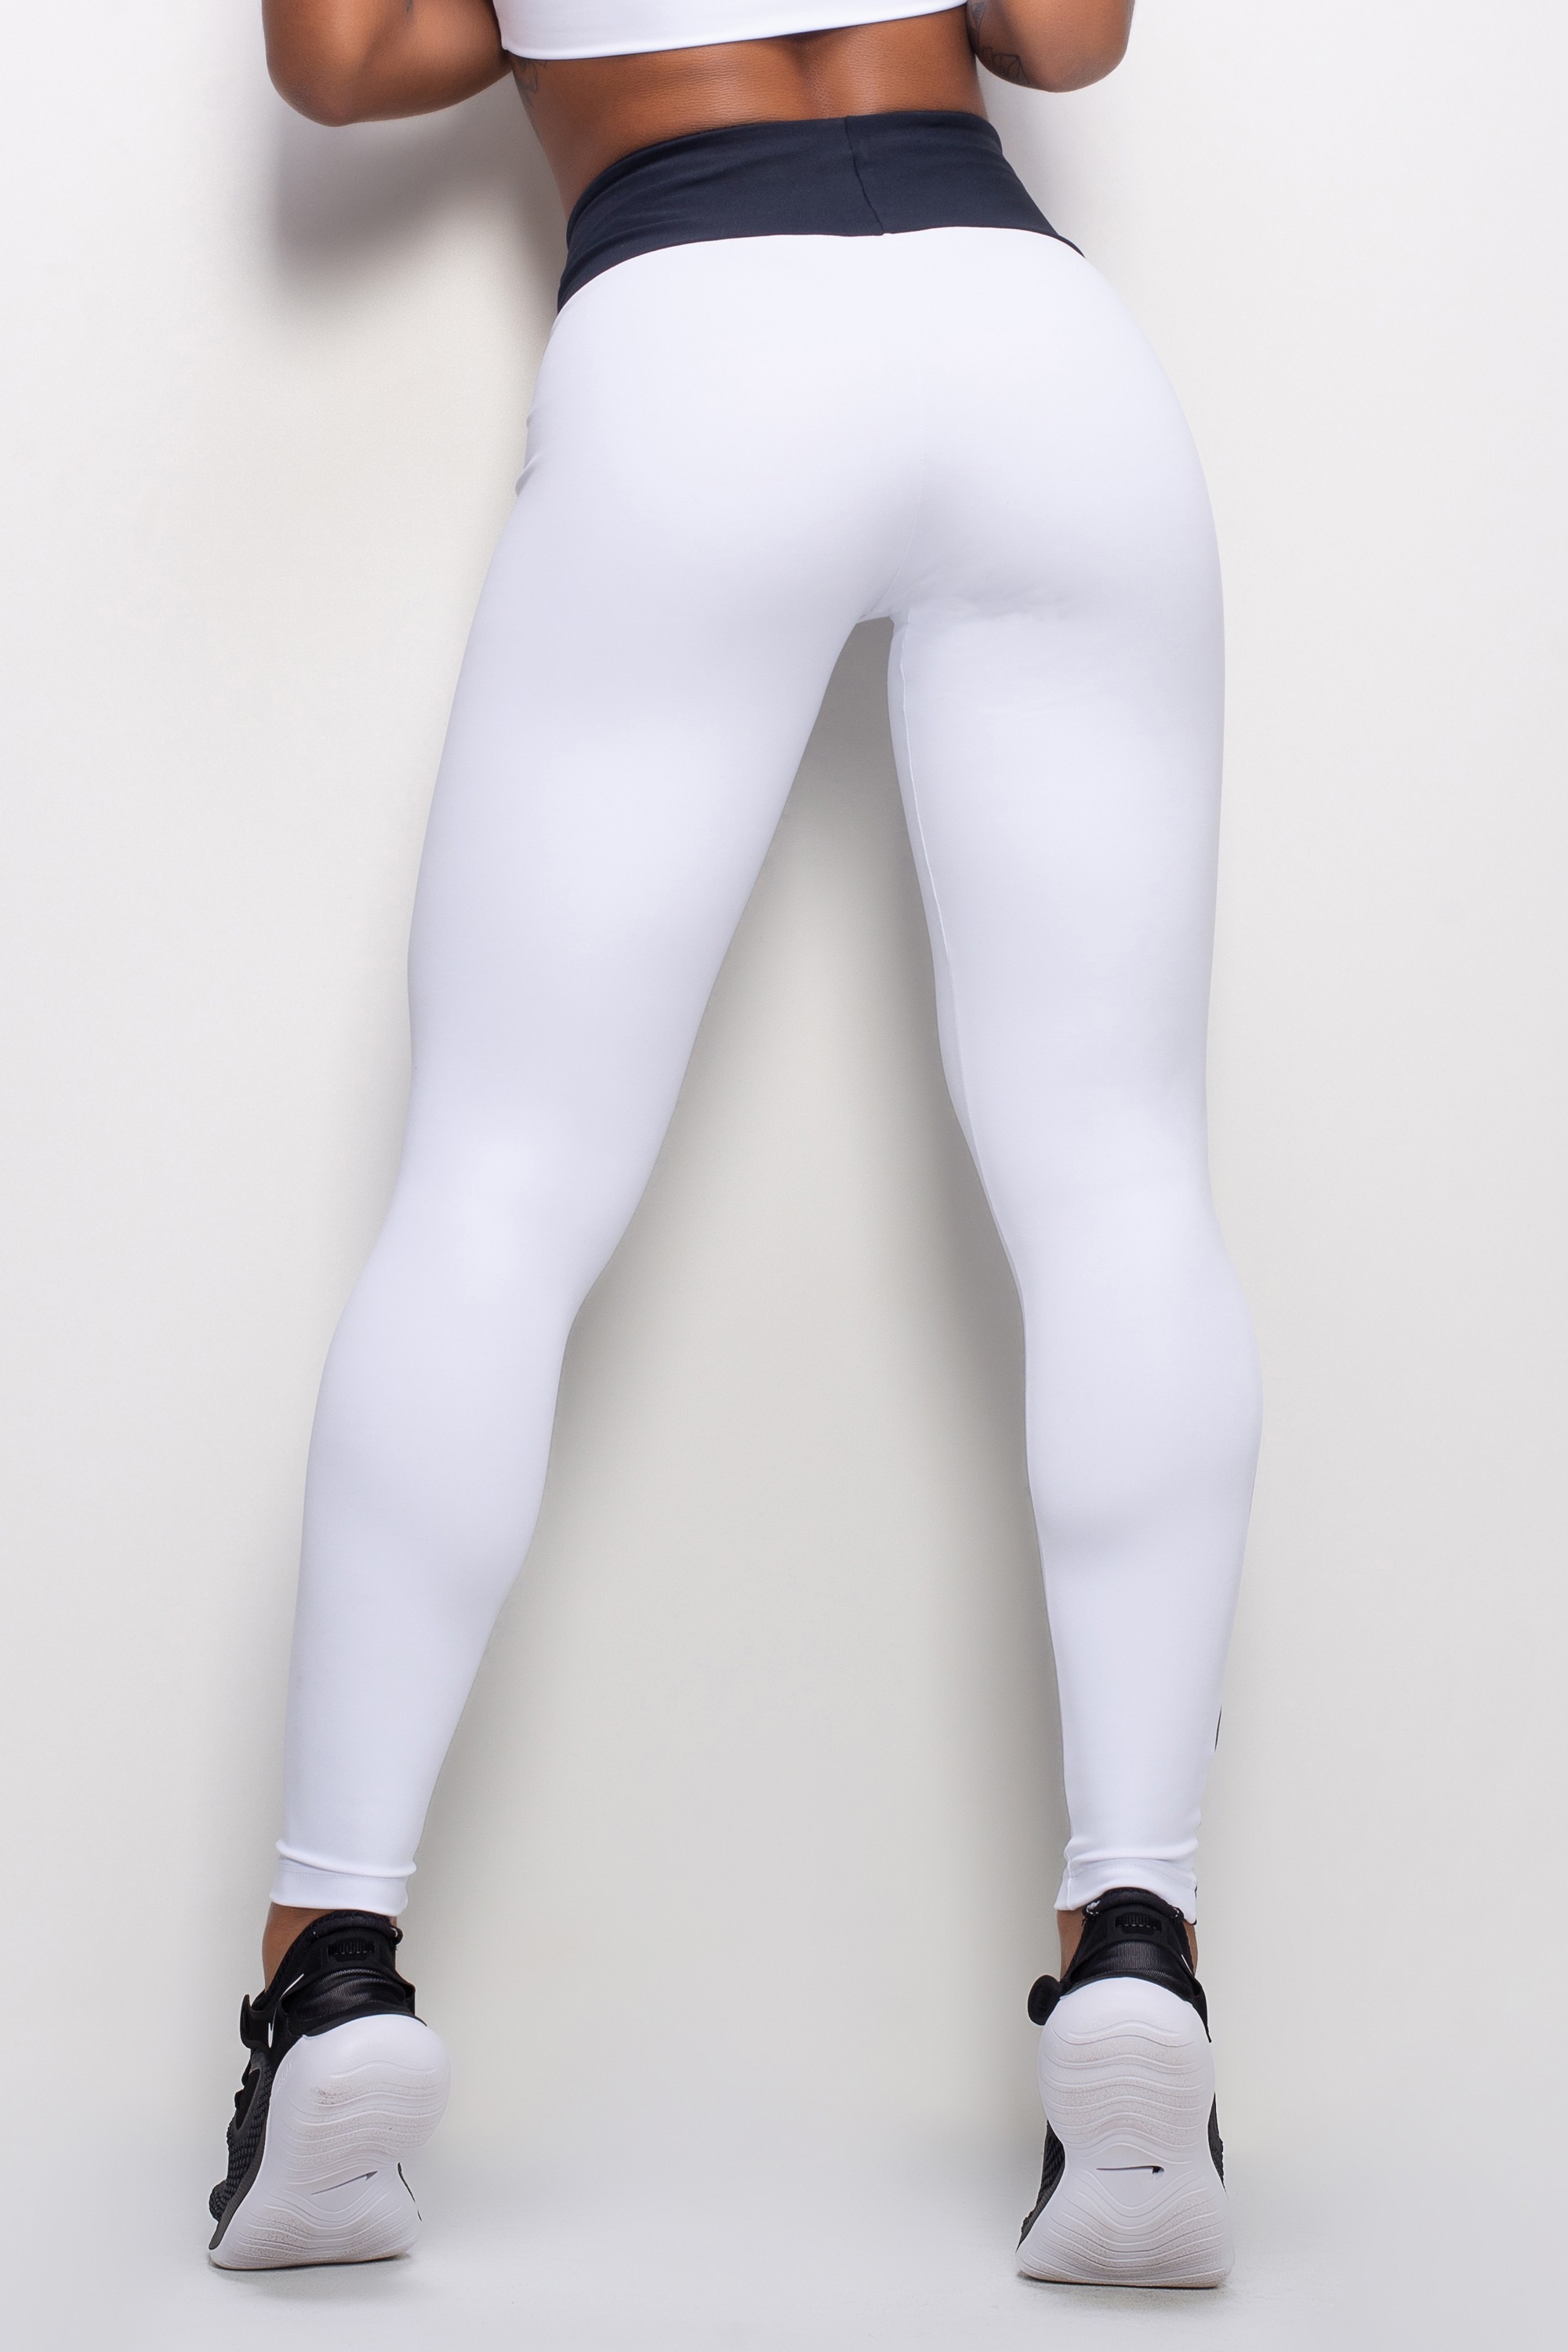 calça branca feminina legging